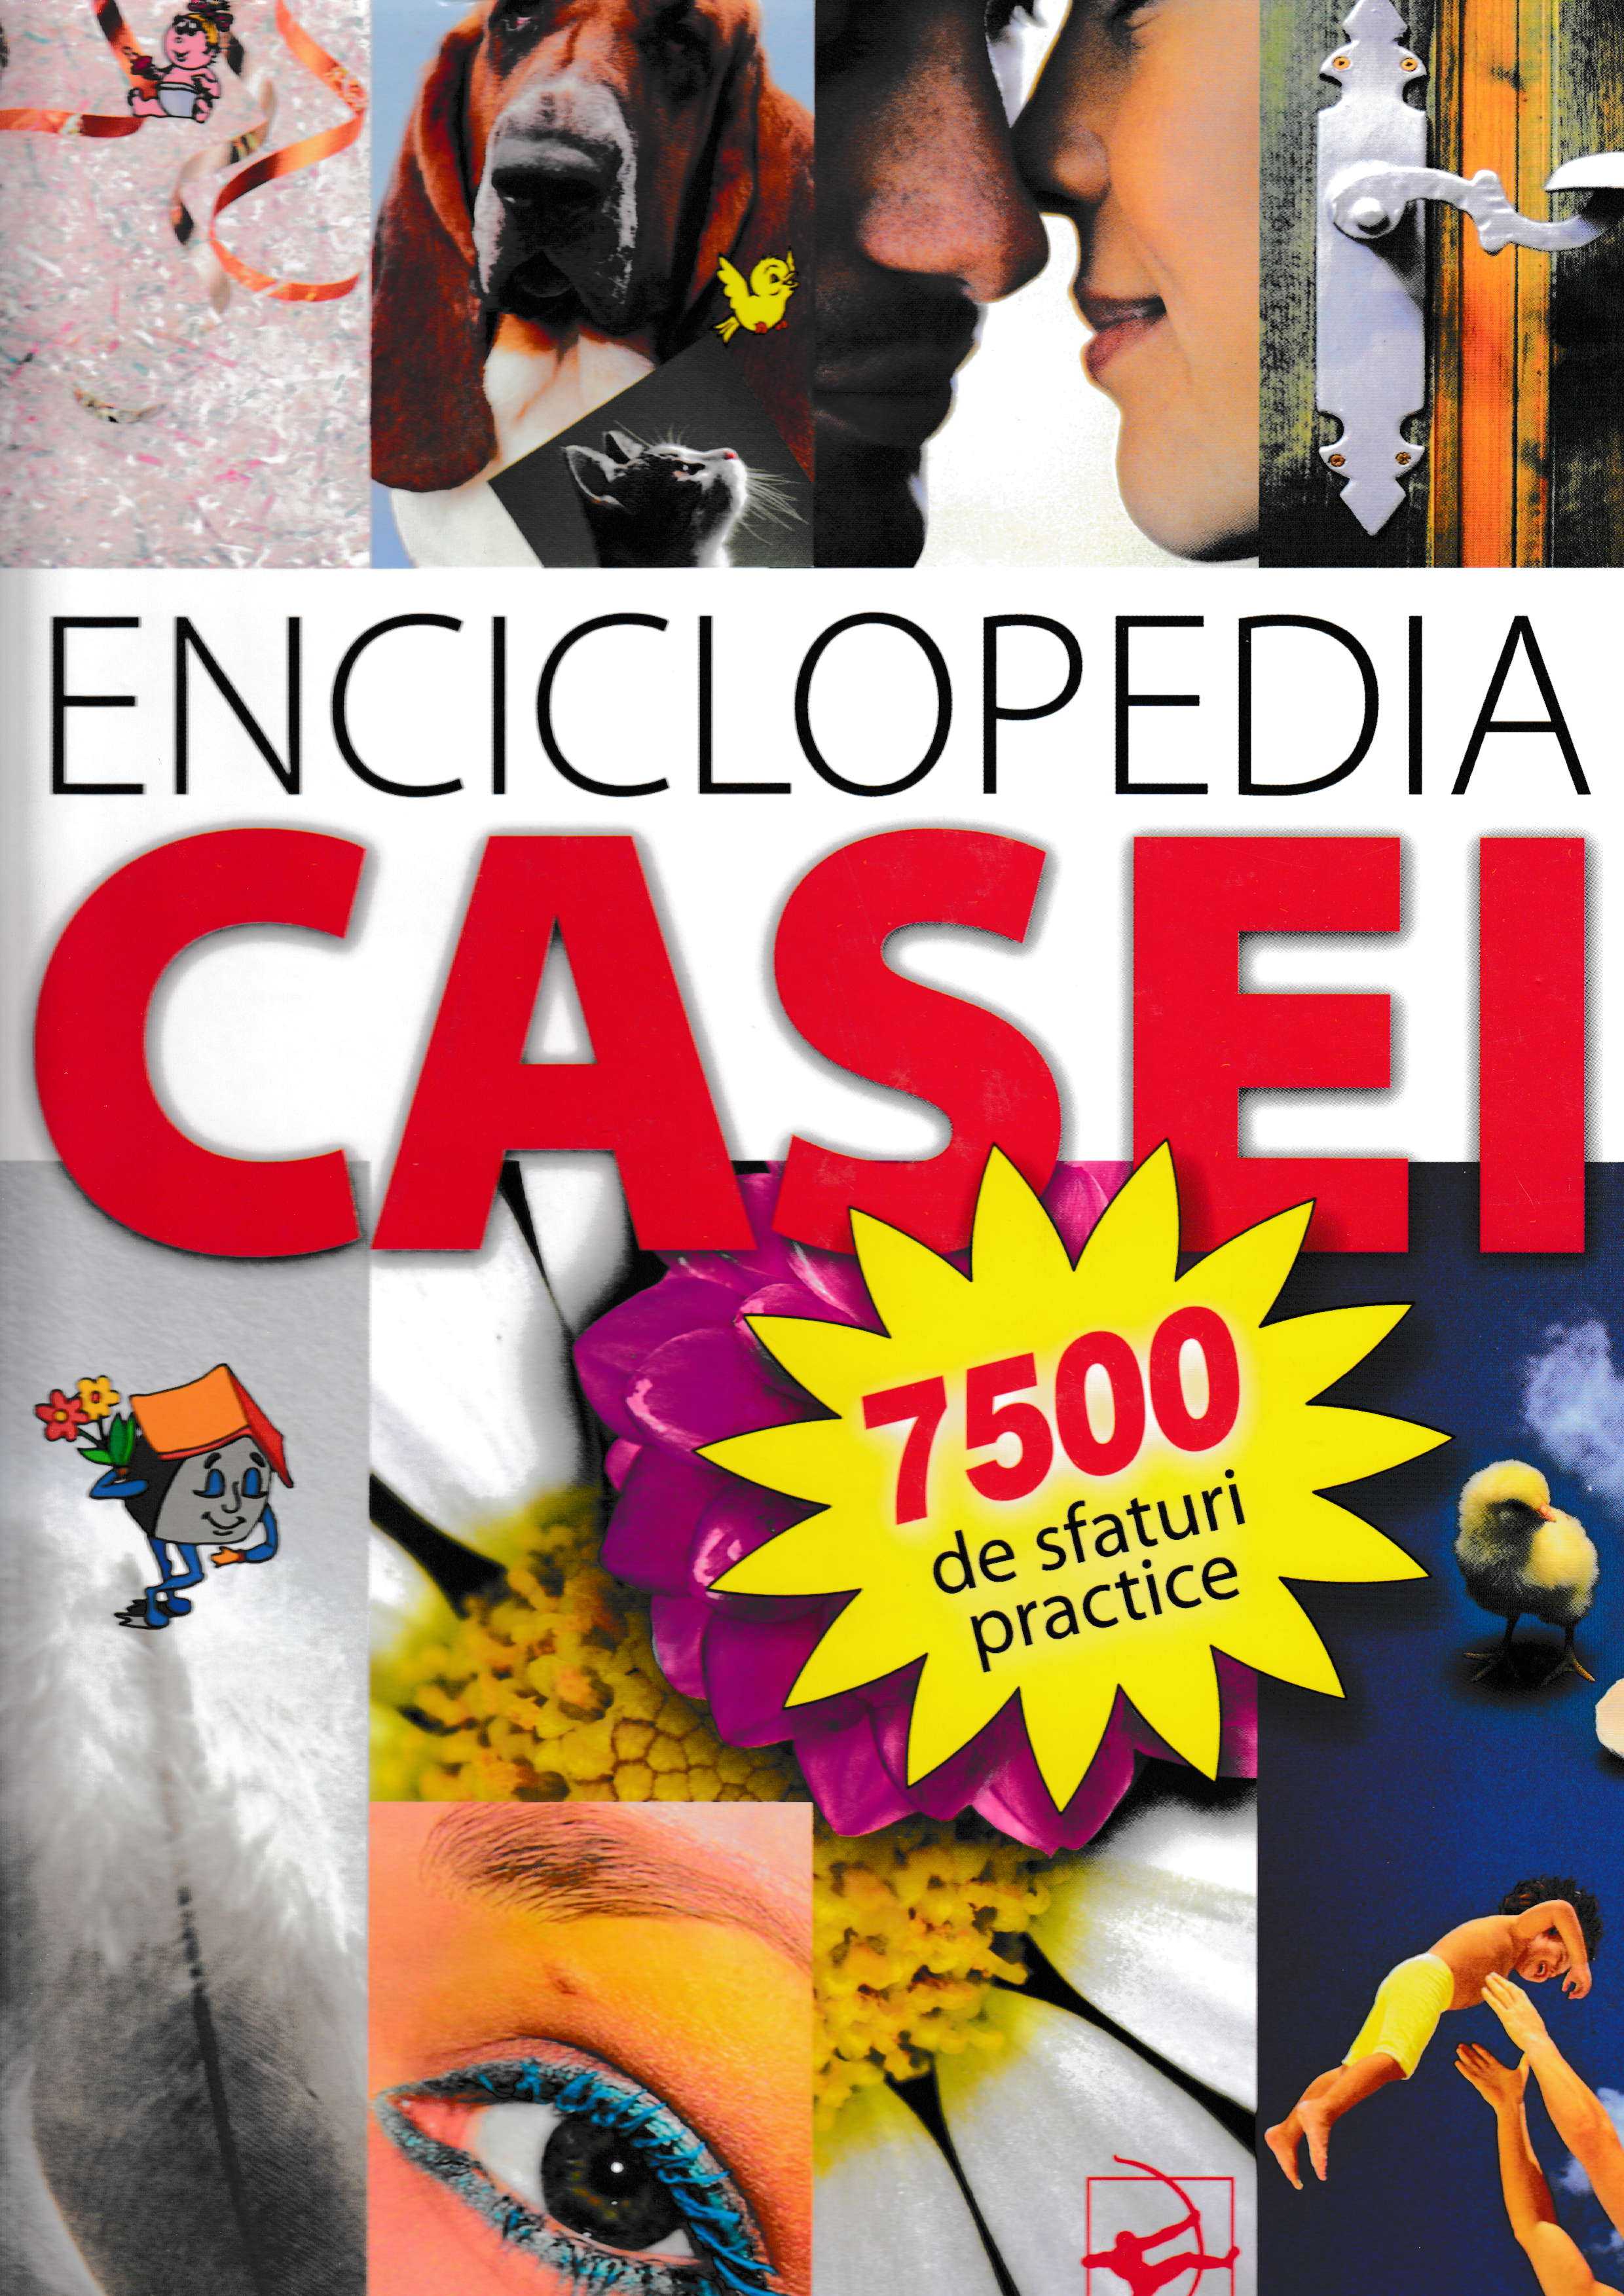 Enciclopedia casei - Mile Radicevic